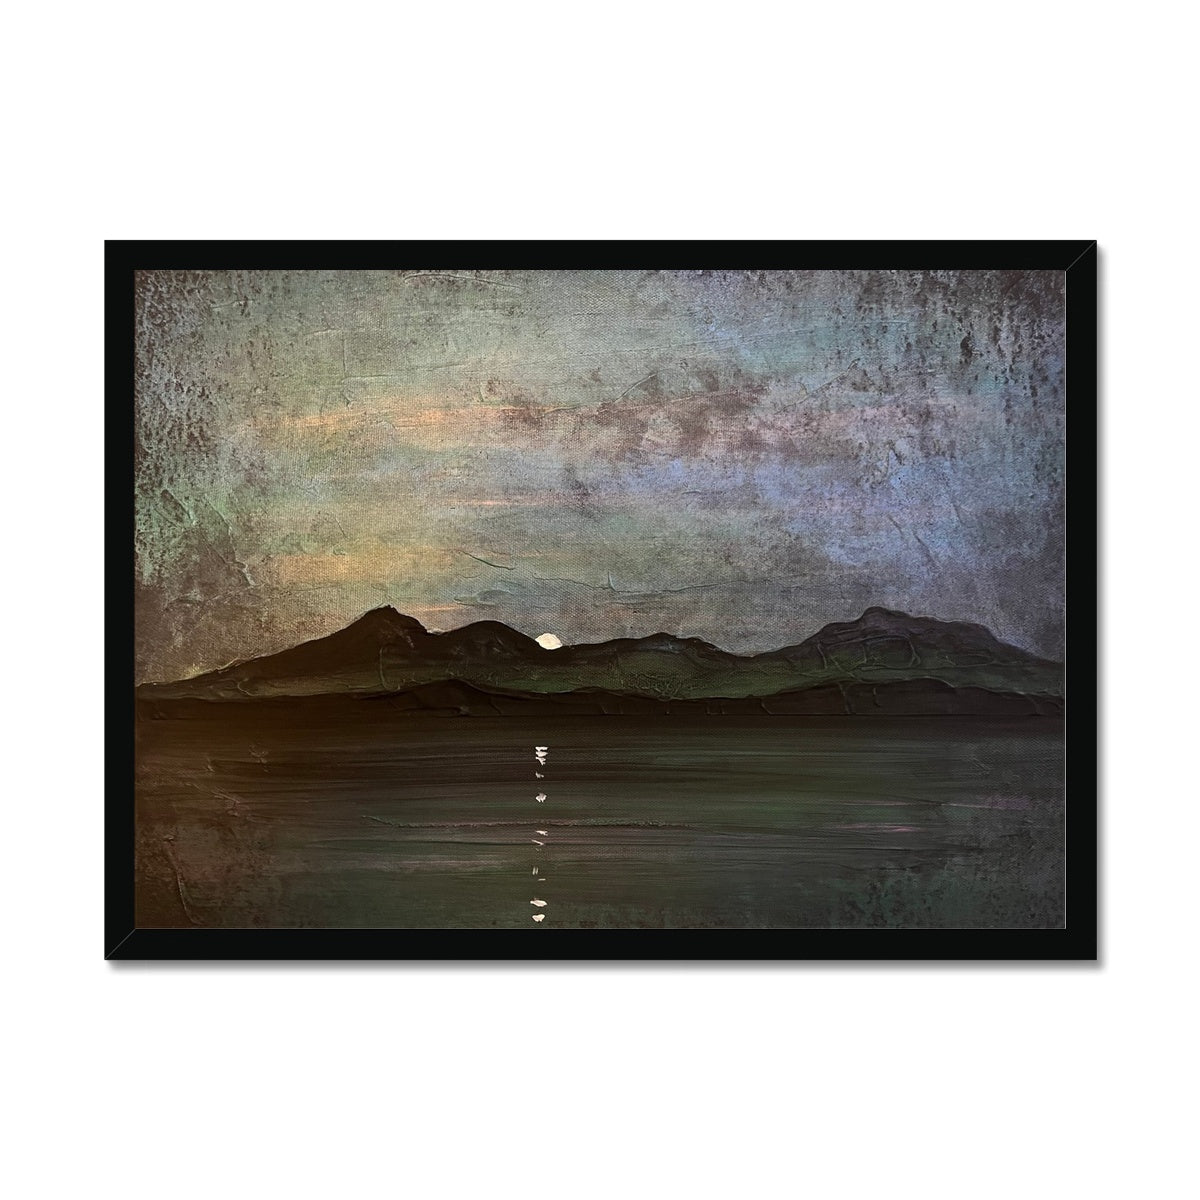 Sleeping Warrior Moonlight Arran Painting | Framed Prints From Scotland-Framed Prints-Arran Art Gallery-A2 Landscape-Black Frame-Paintings, Prints, Homeware, Art Gifts From Scotland By Scottish Artist Kevin Hunter